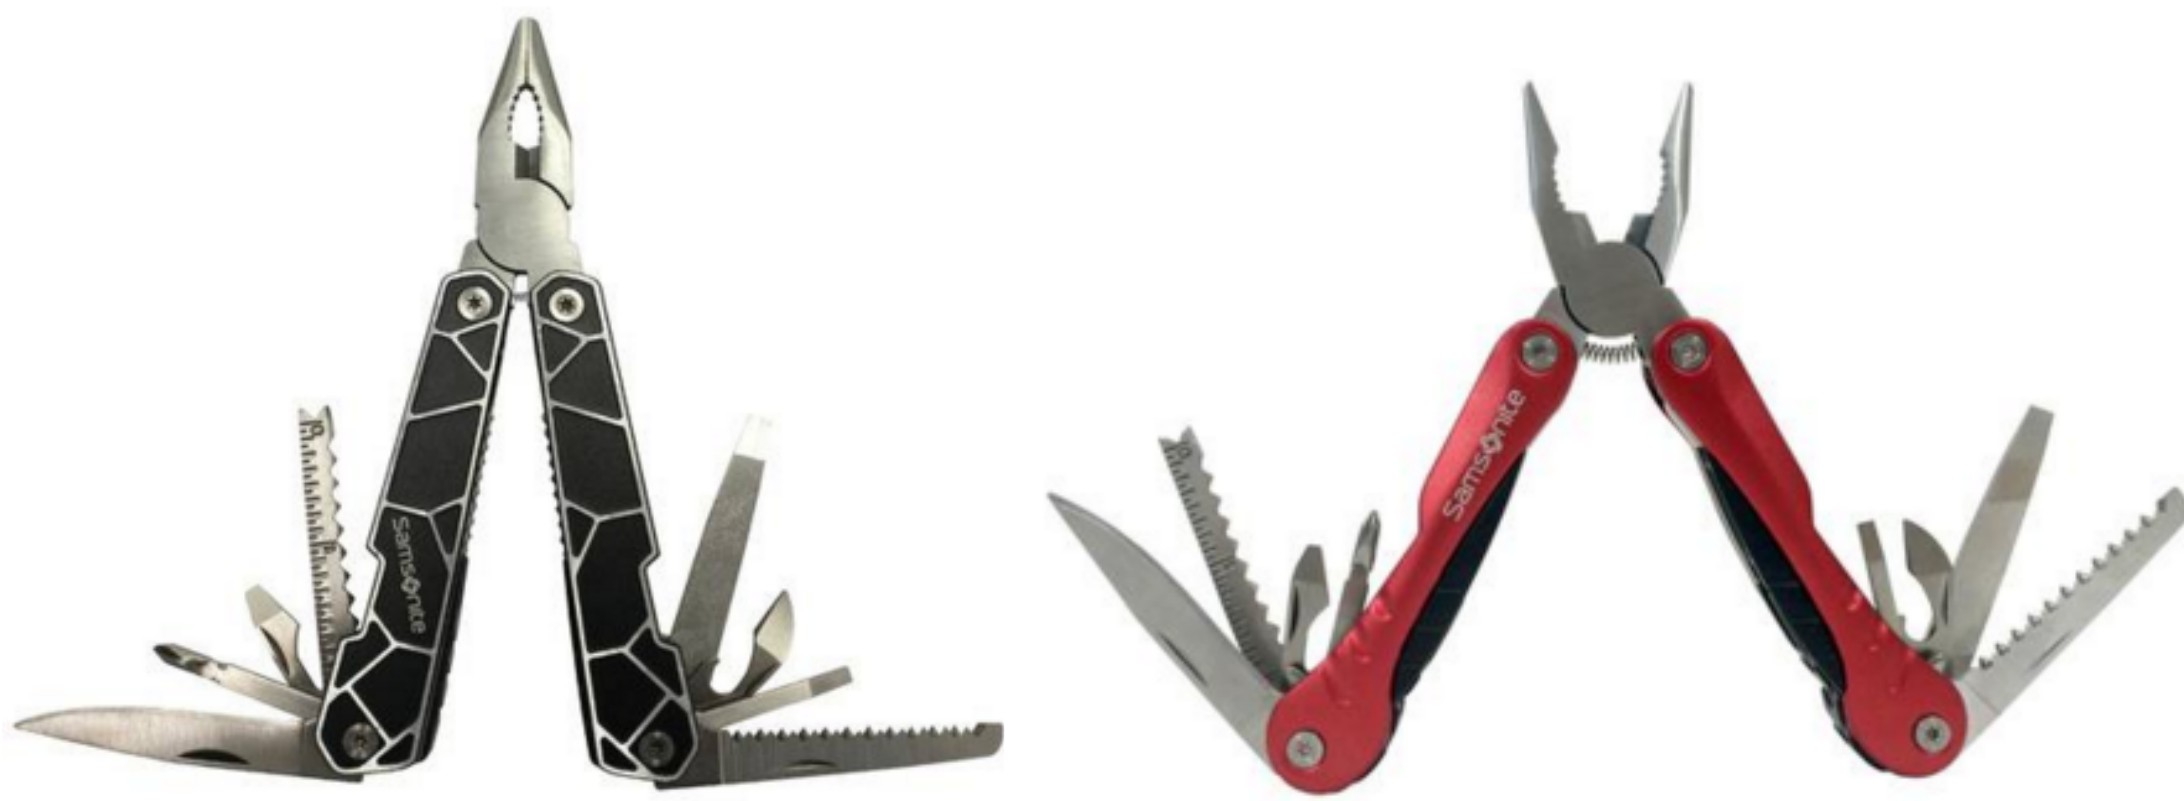 samsonite multi tool pliers